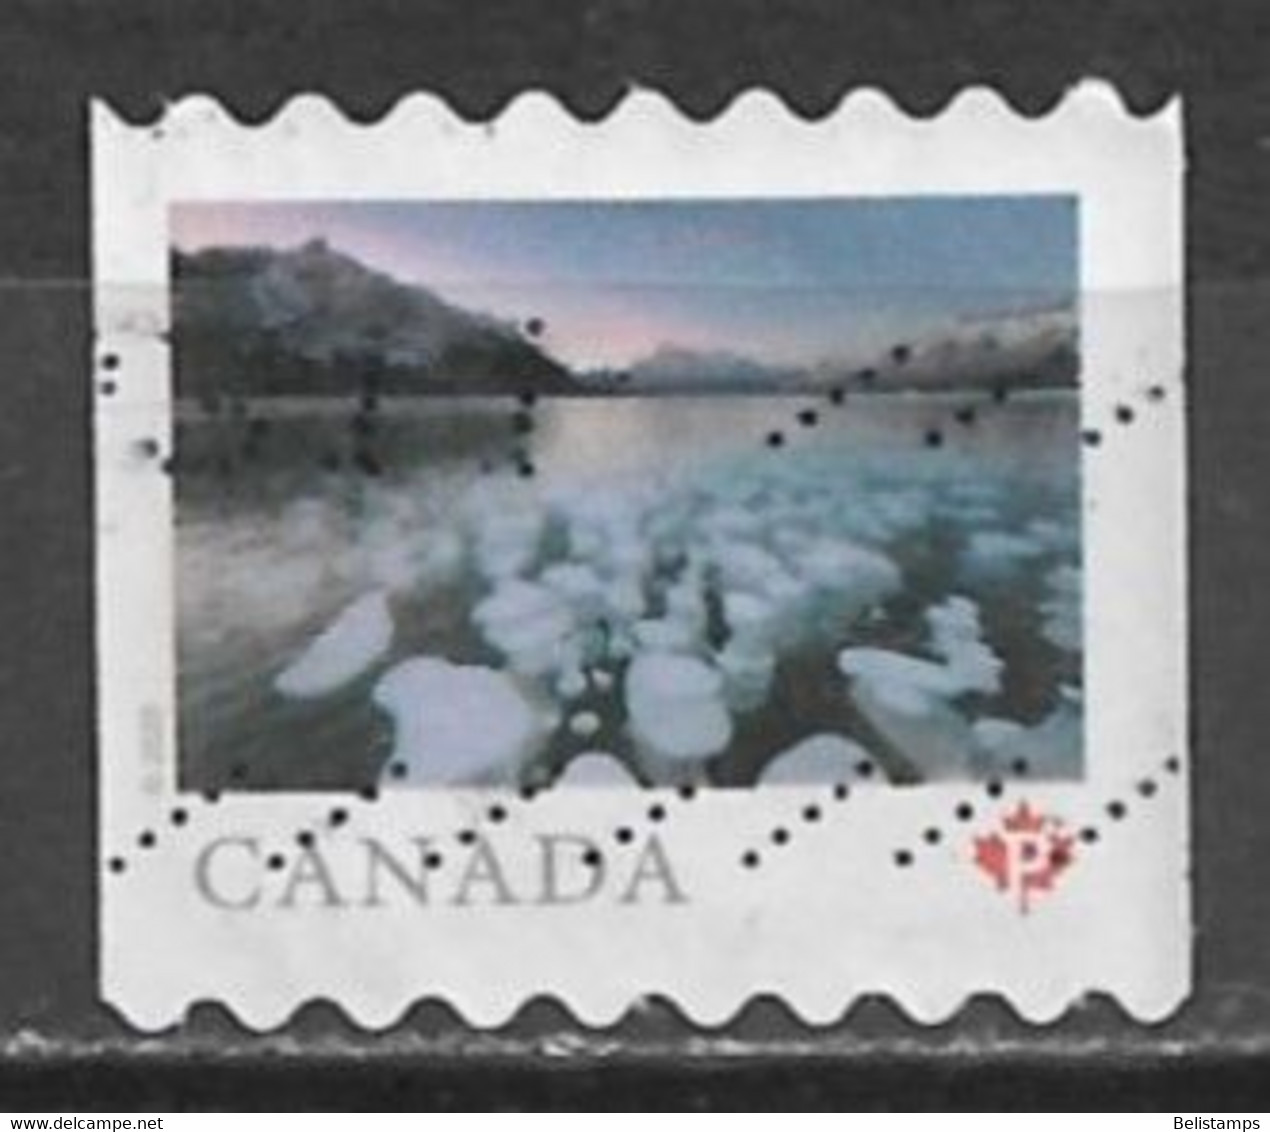 Canada 2020. Scott #3212 (U) Abraham Lake, Alberta - Coil Stamps